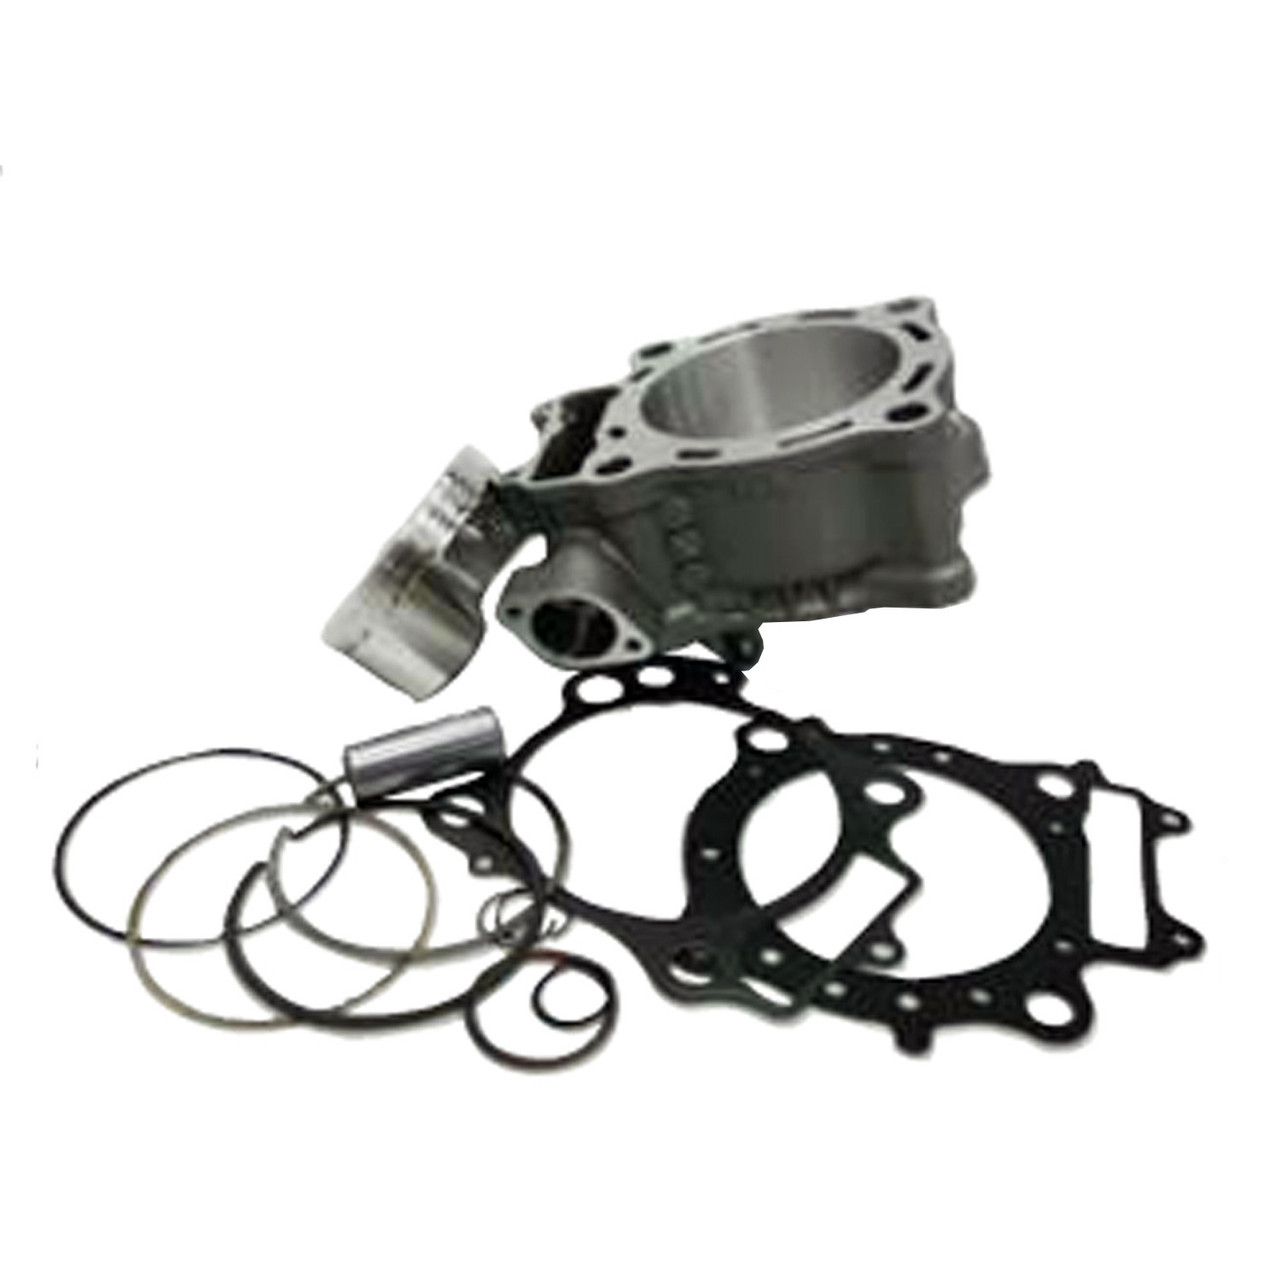 KTM New Replacement Dirt Bike Standard Bore Gasket Set, 5946, 50001-G01